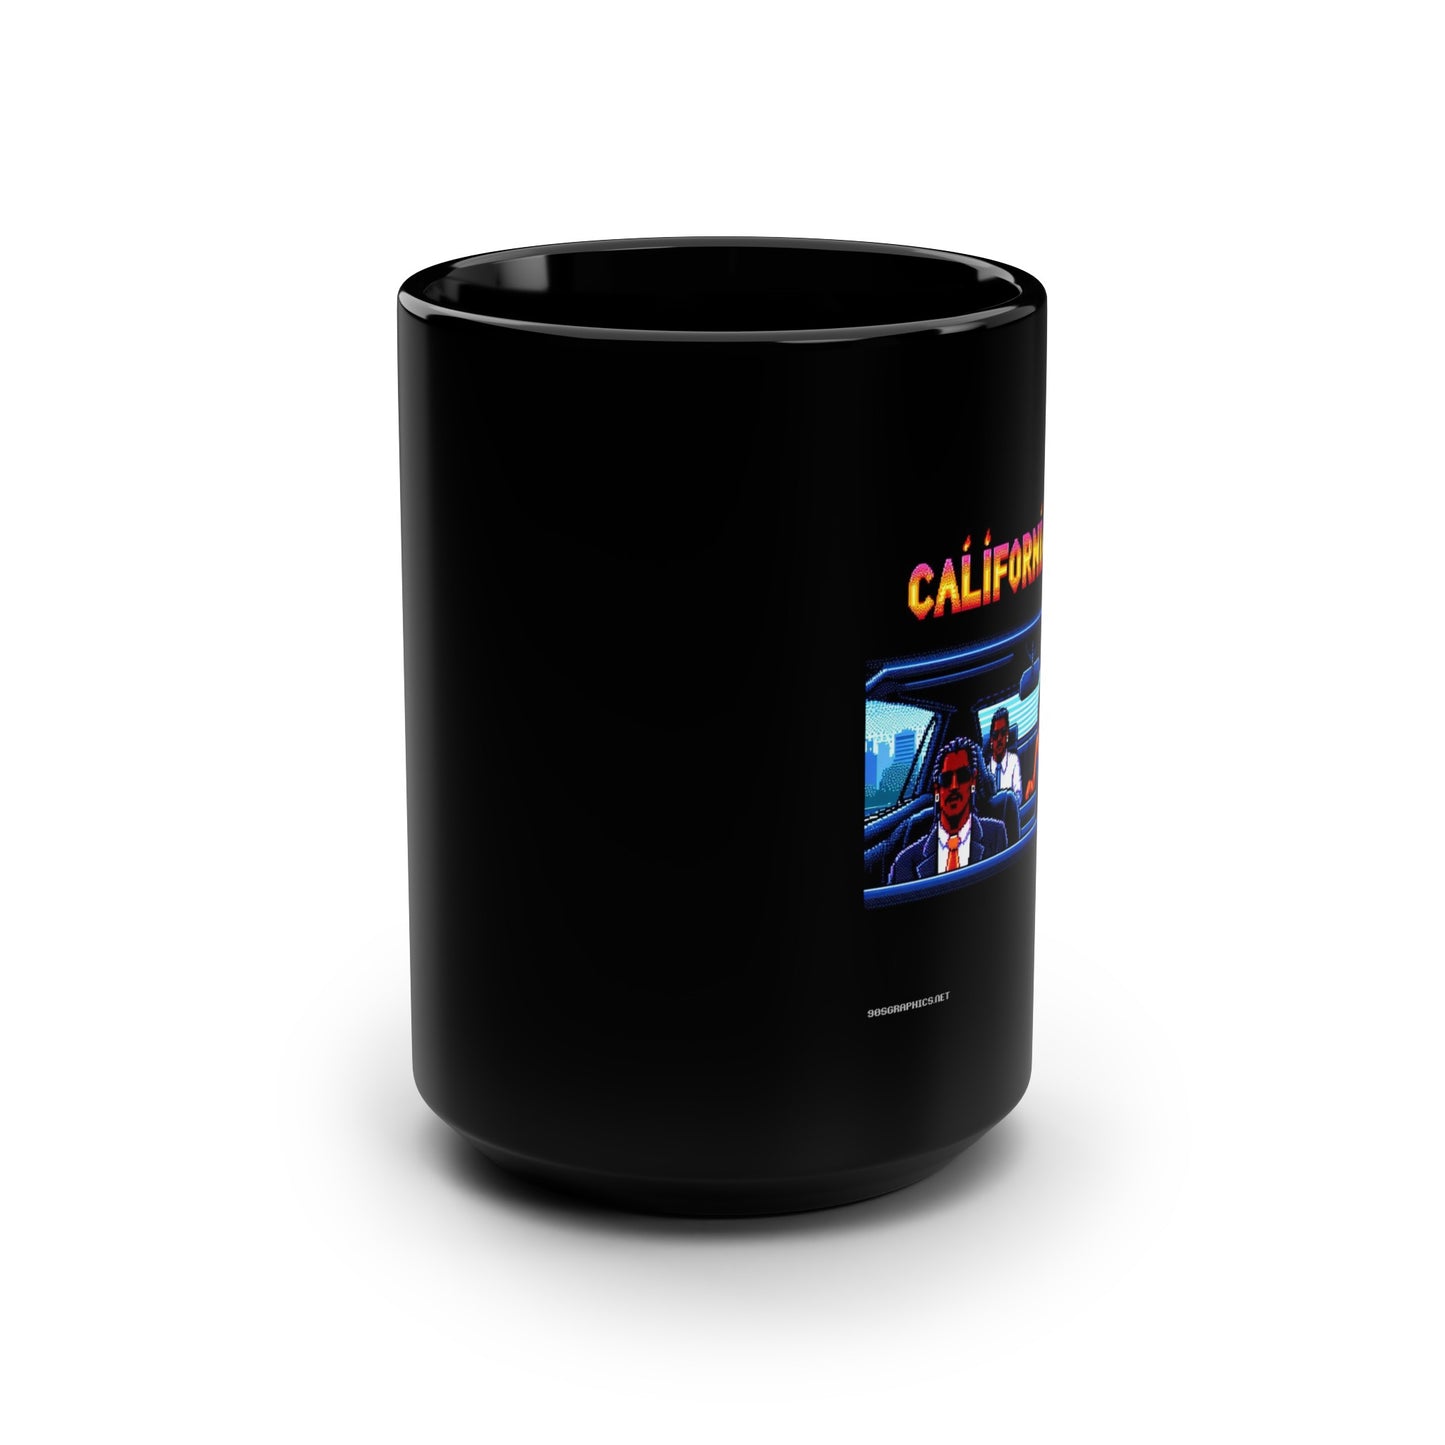 CALIFORNIA HEAT Black Mug, (15oz)-15oz-